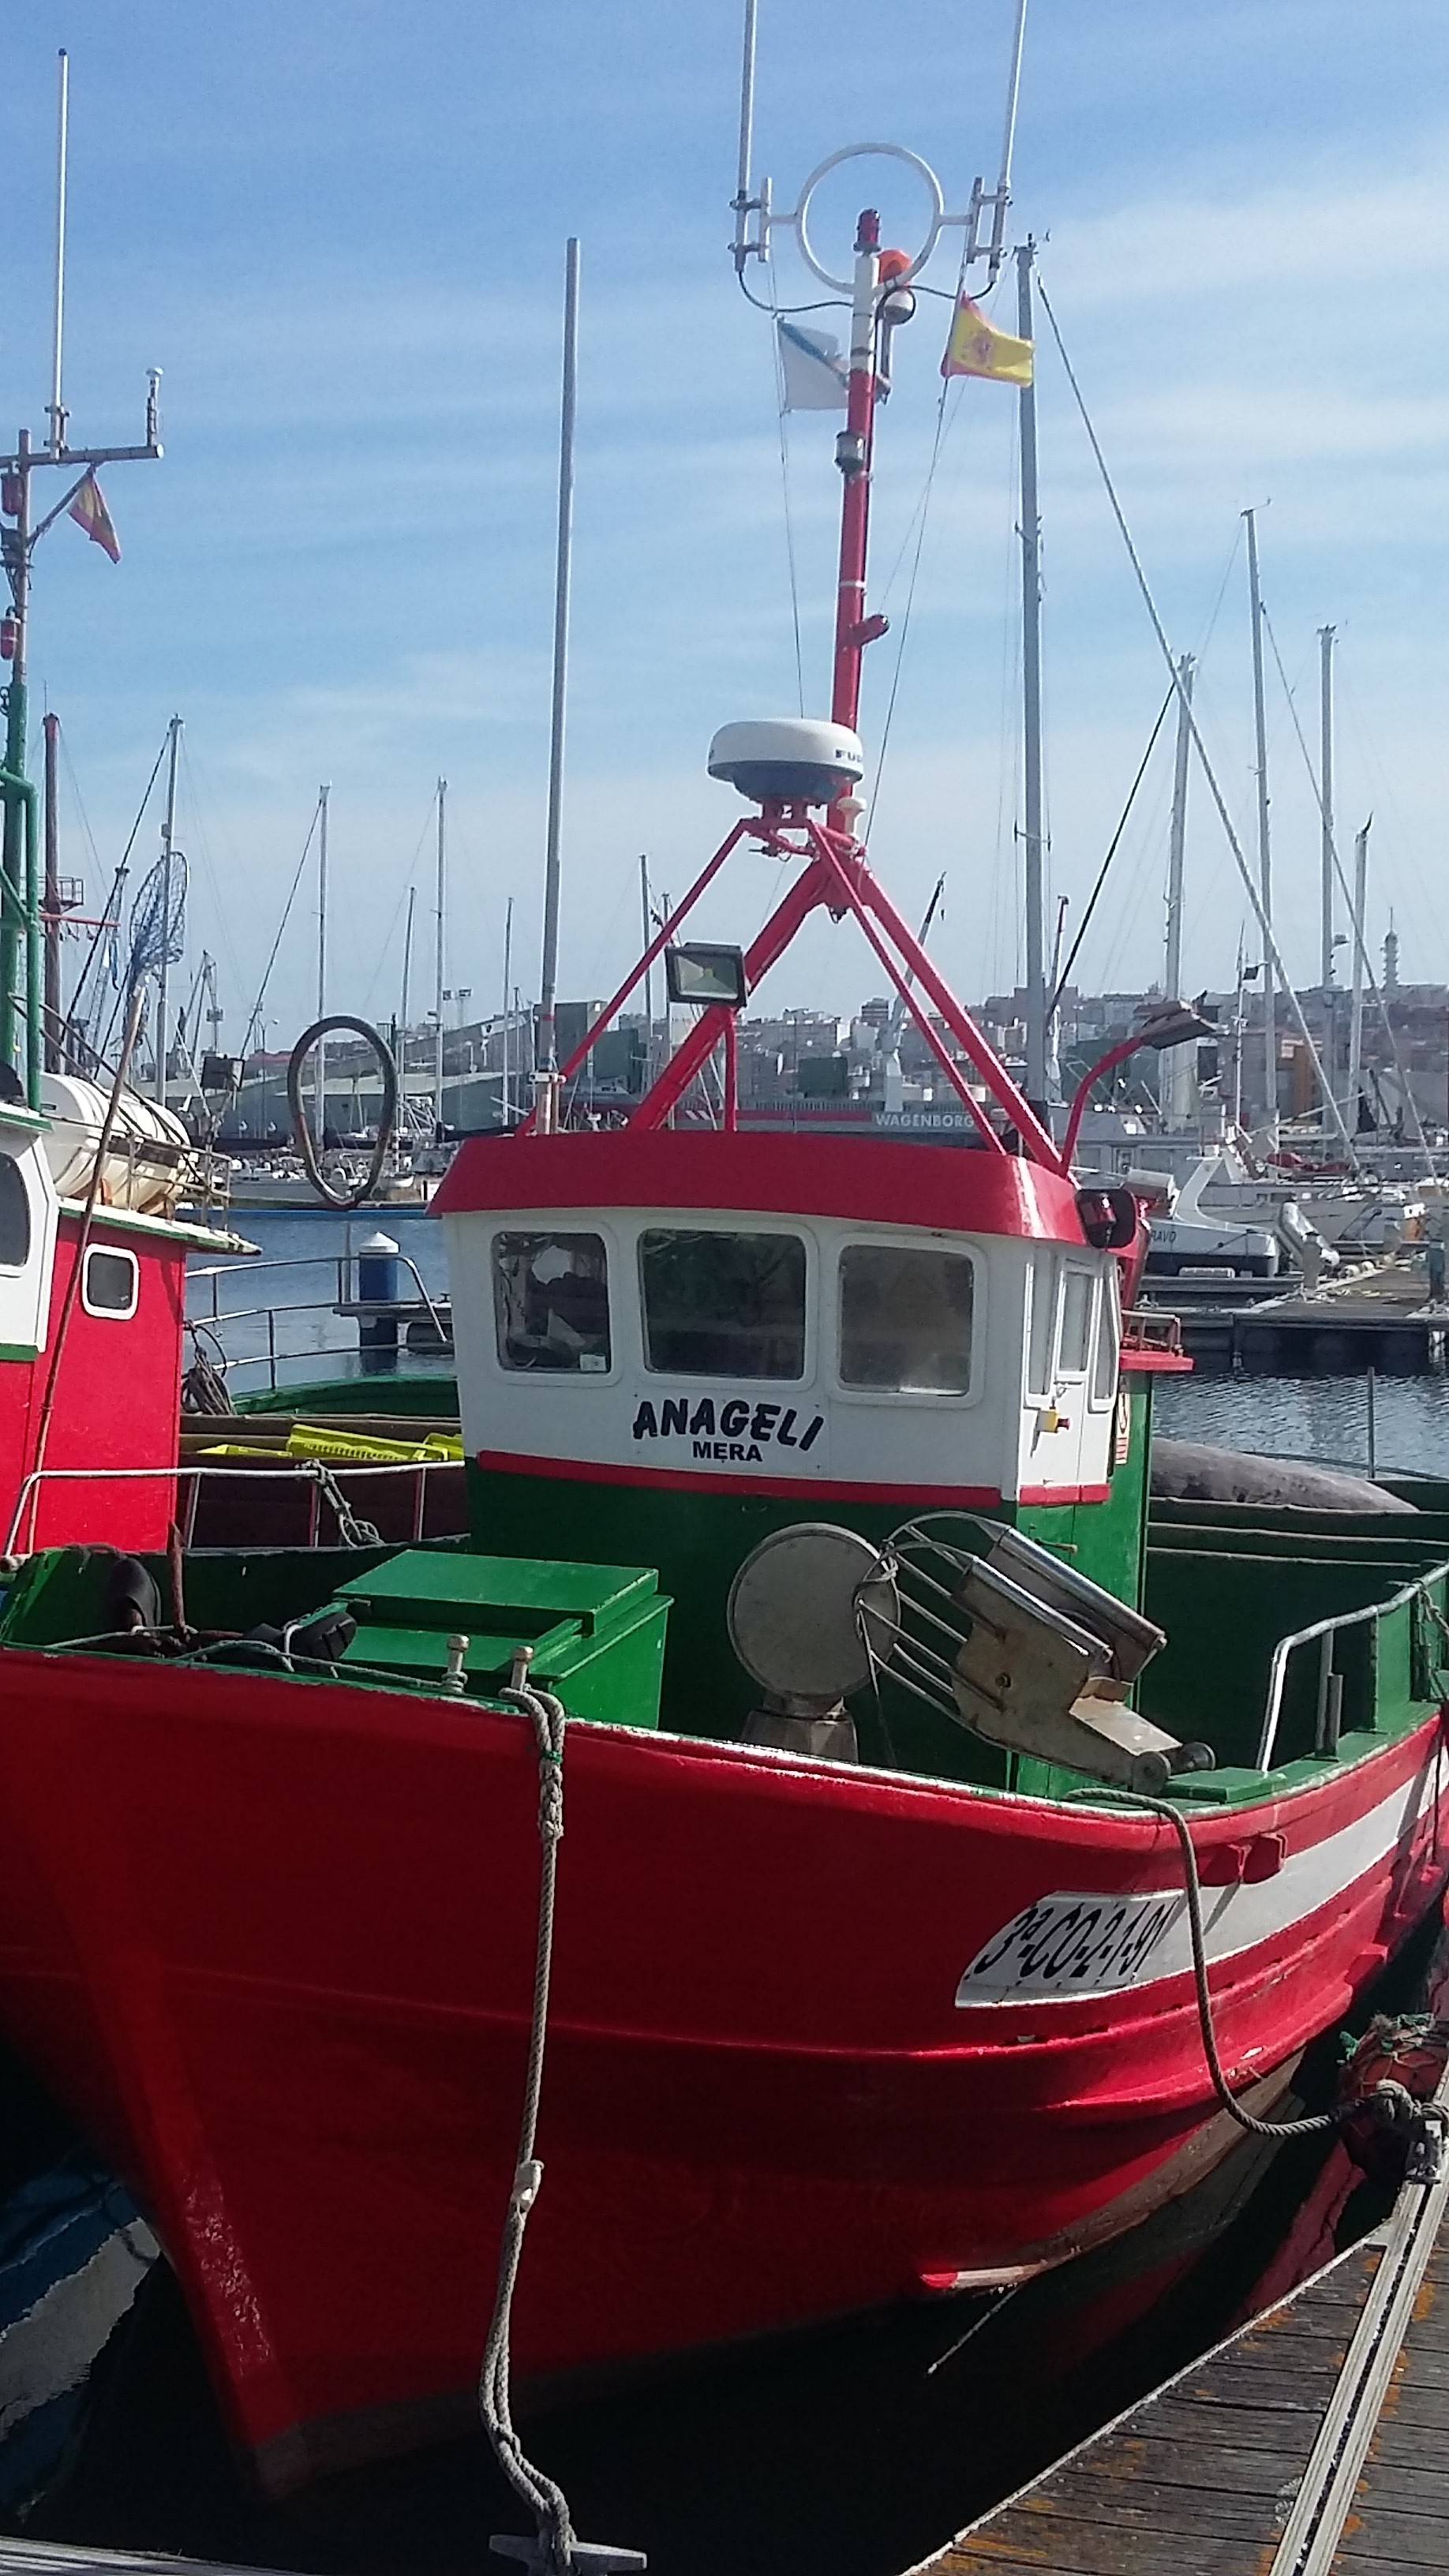 Barco Anageli -Mera